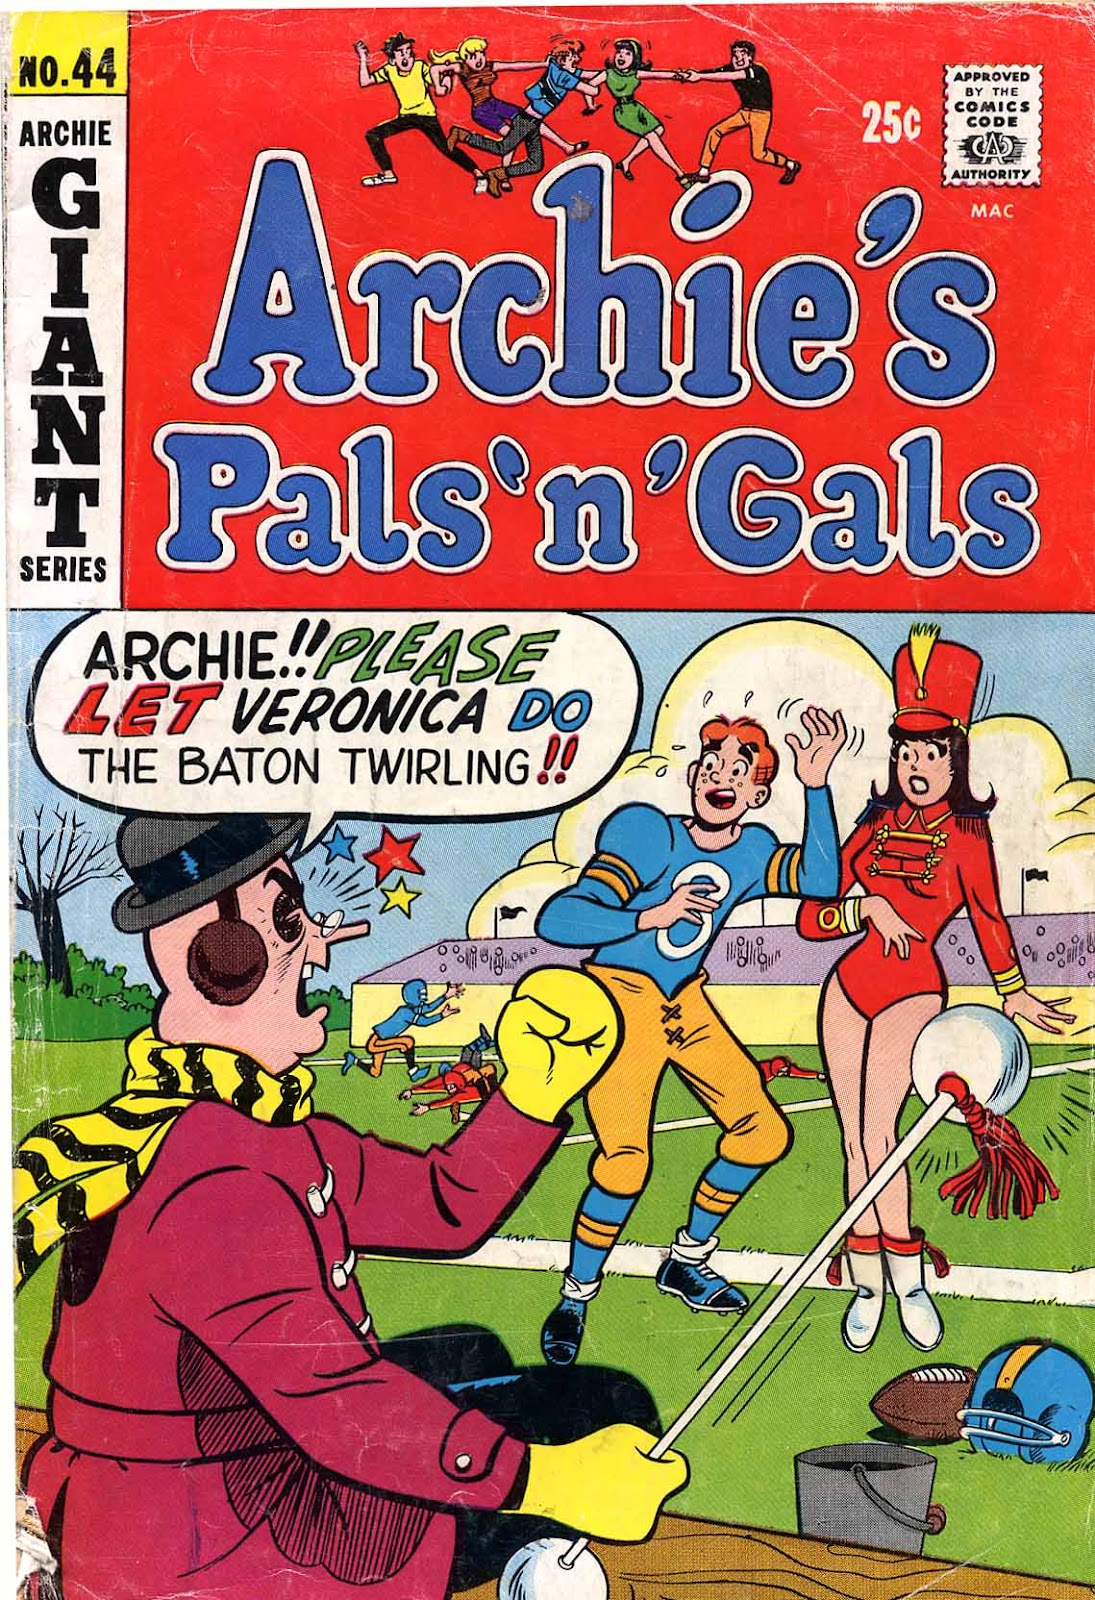 Archie's Pals 'N' Gals 44 Page 1